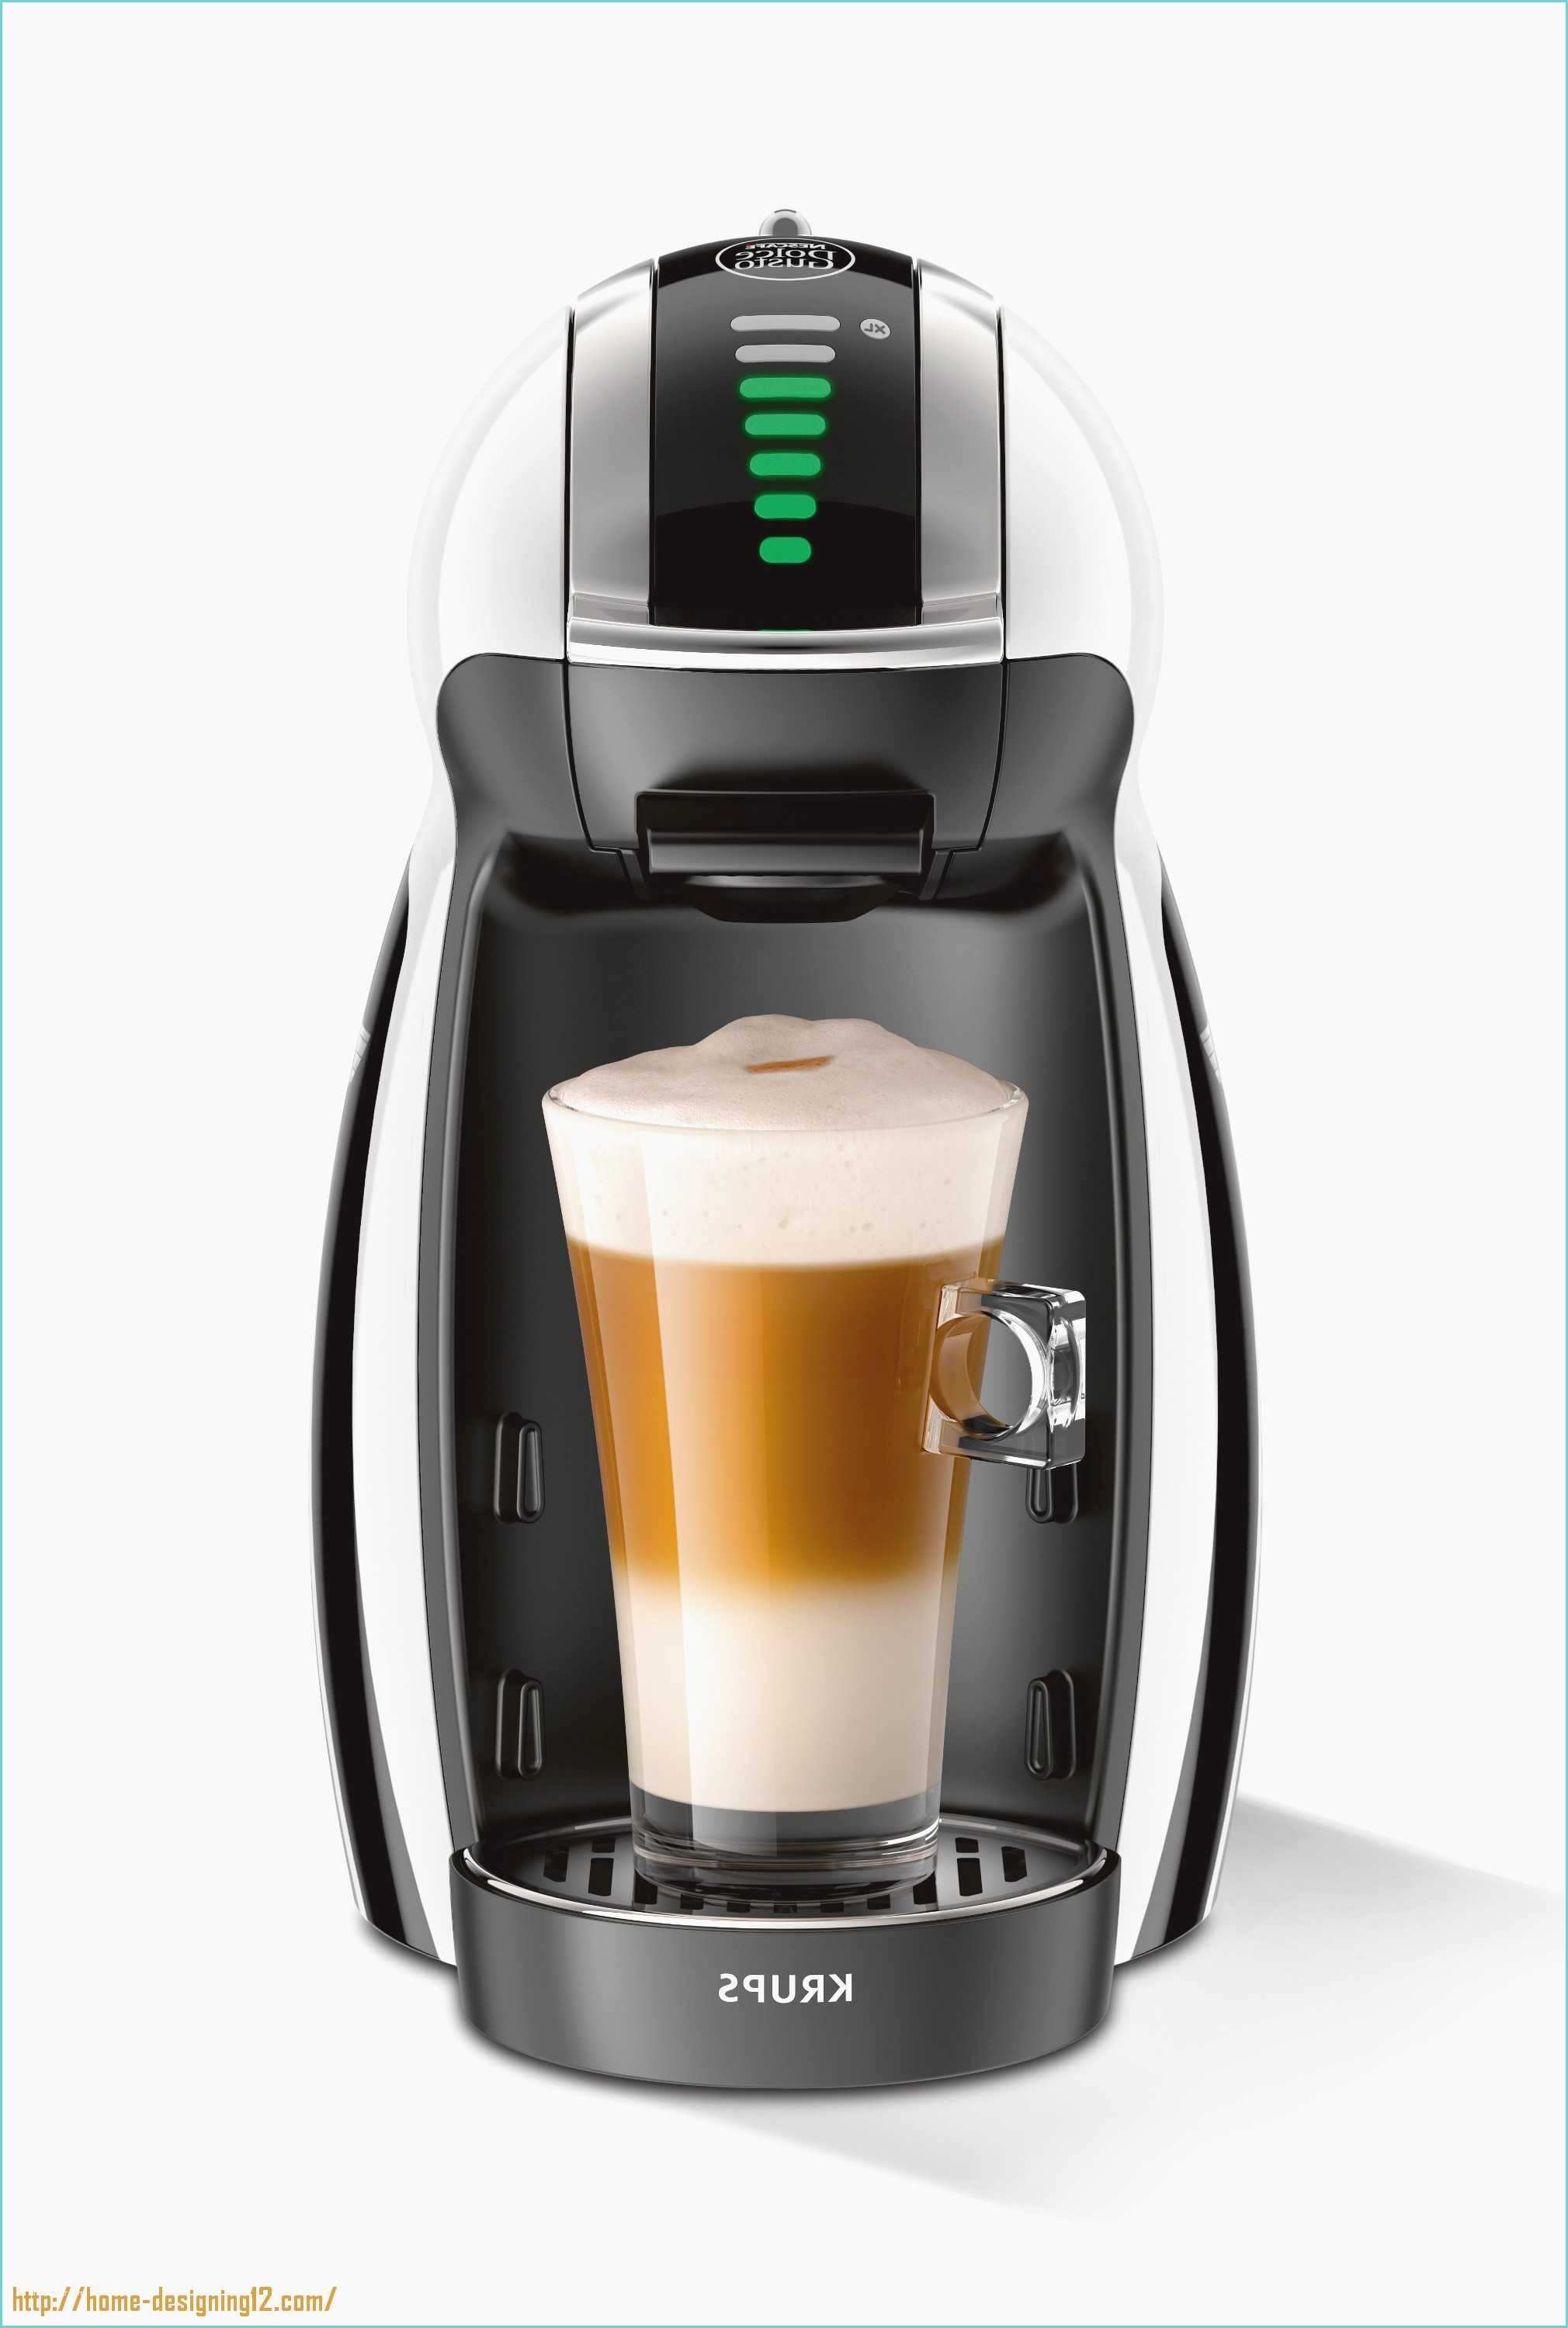 Machine Nespresso Pas Cher Dosettes Nespresso Pas Cher Finest Krups Cafetiere A